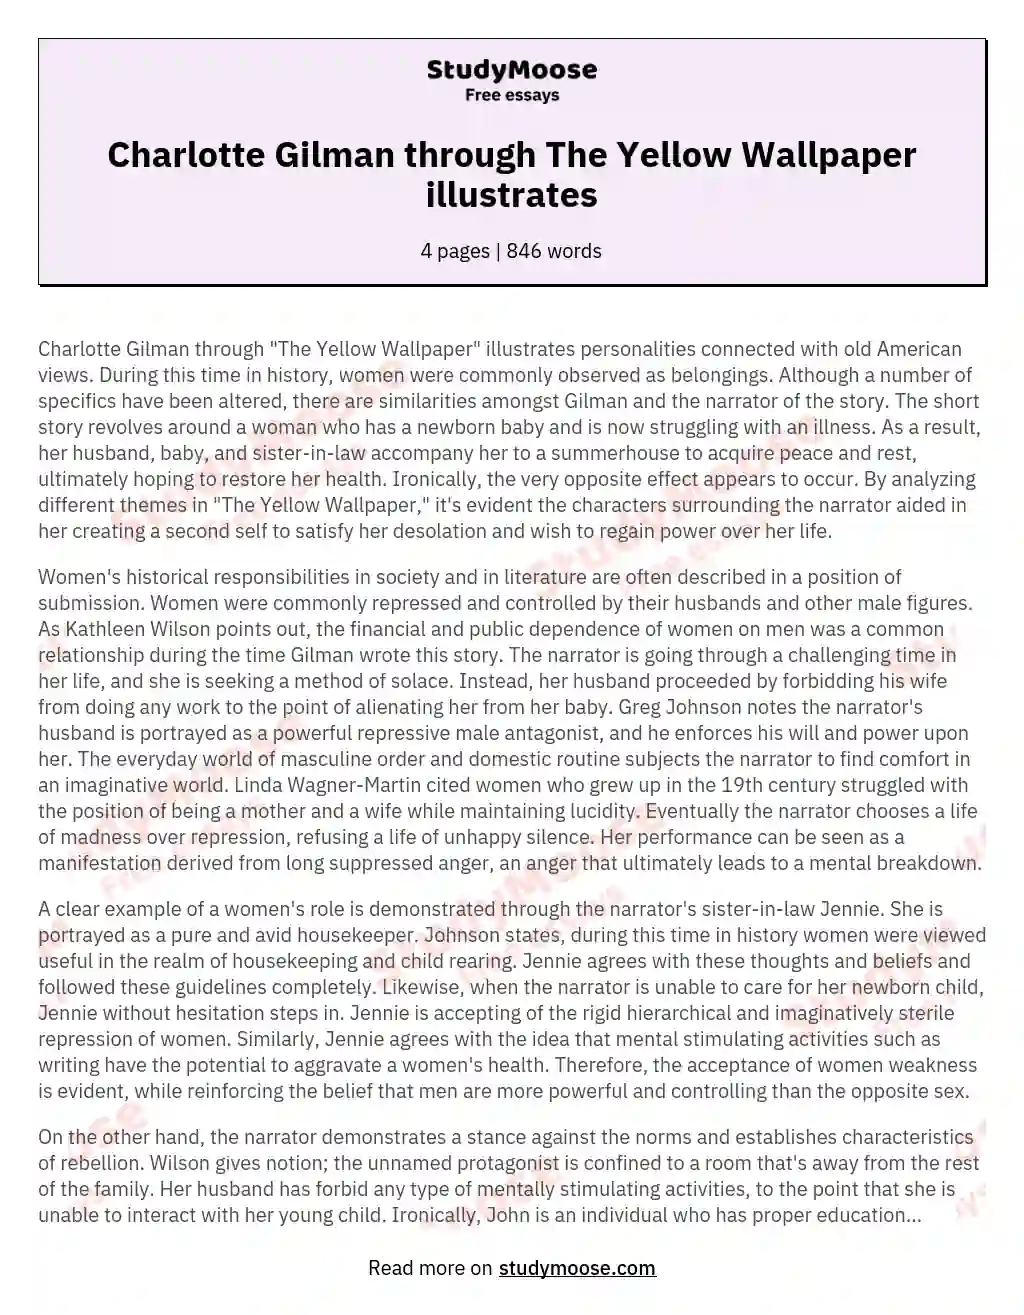 Charlotte Gilman through The Yellow Wallpaper illustrates essay